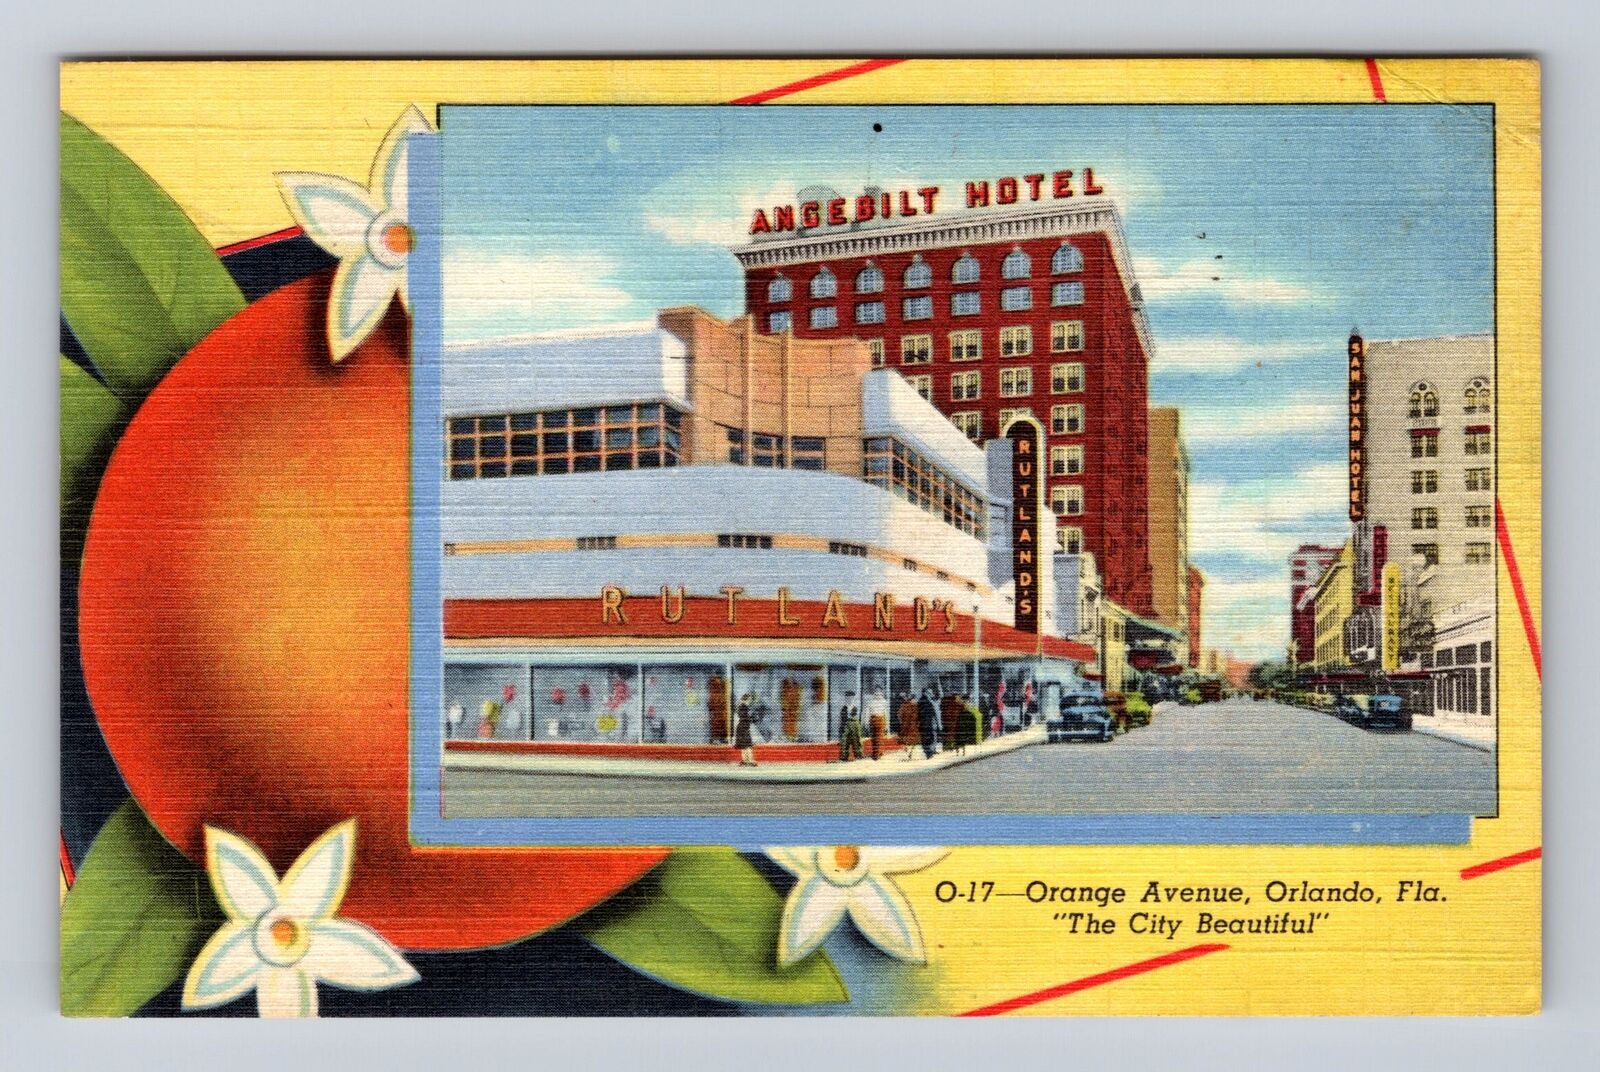 Orlando FL-Florida, Orange Avenue, Angebilt Hotel, Vintage c1952 Postcard